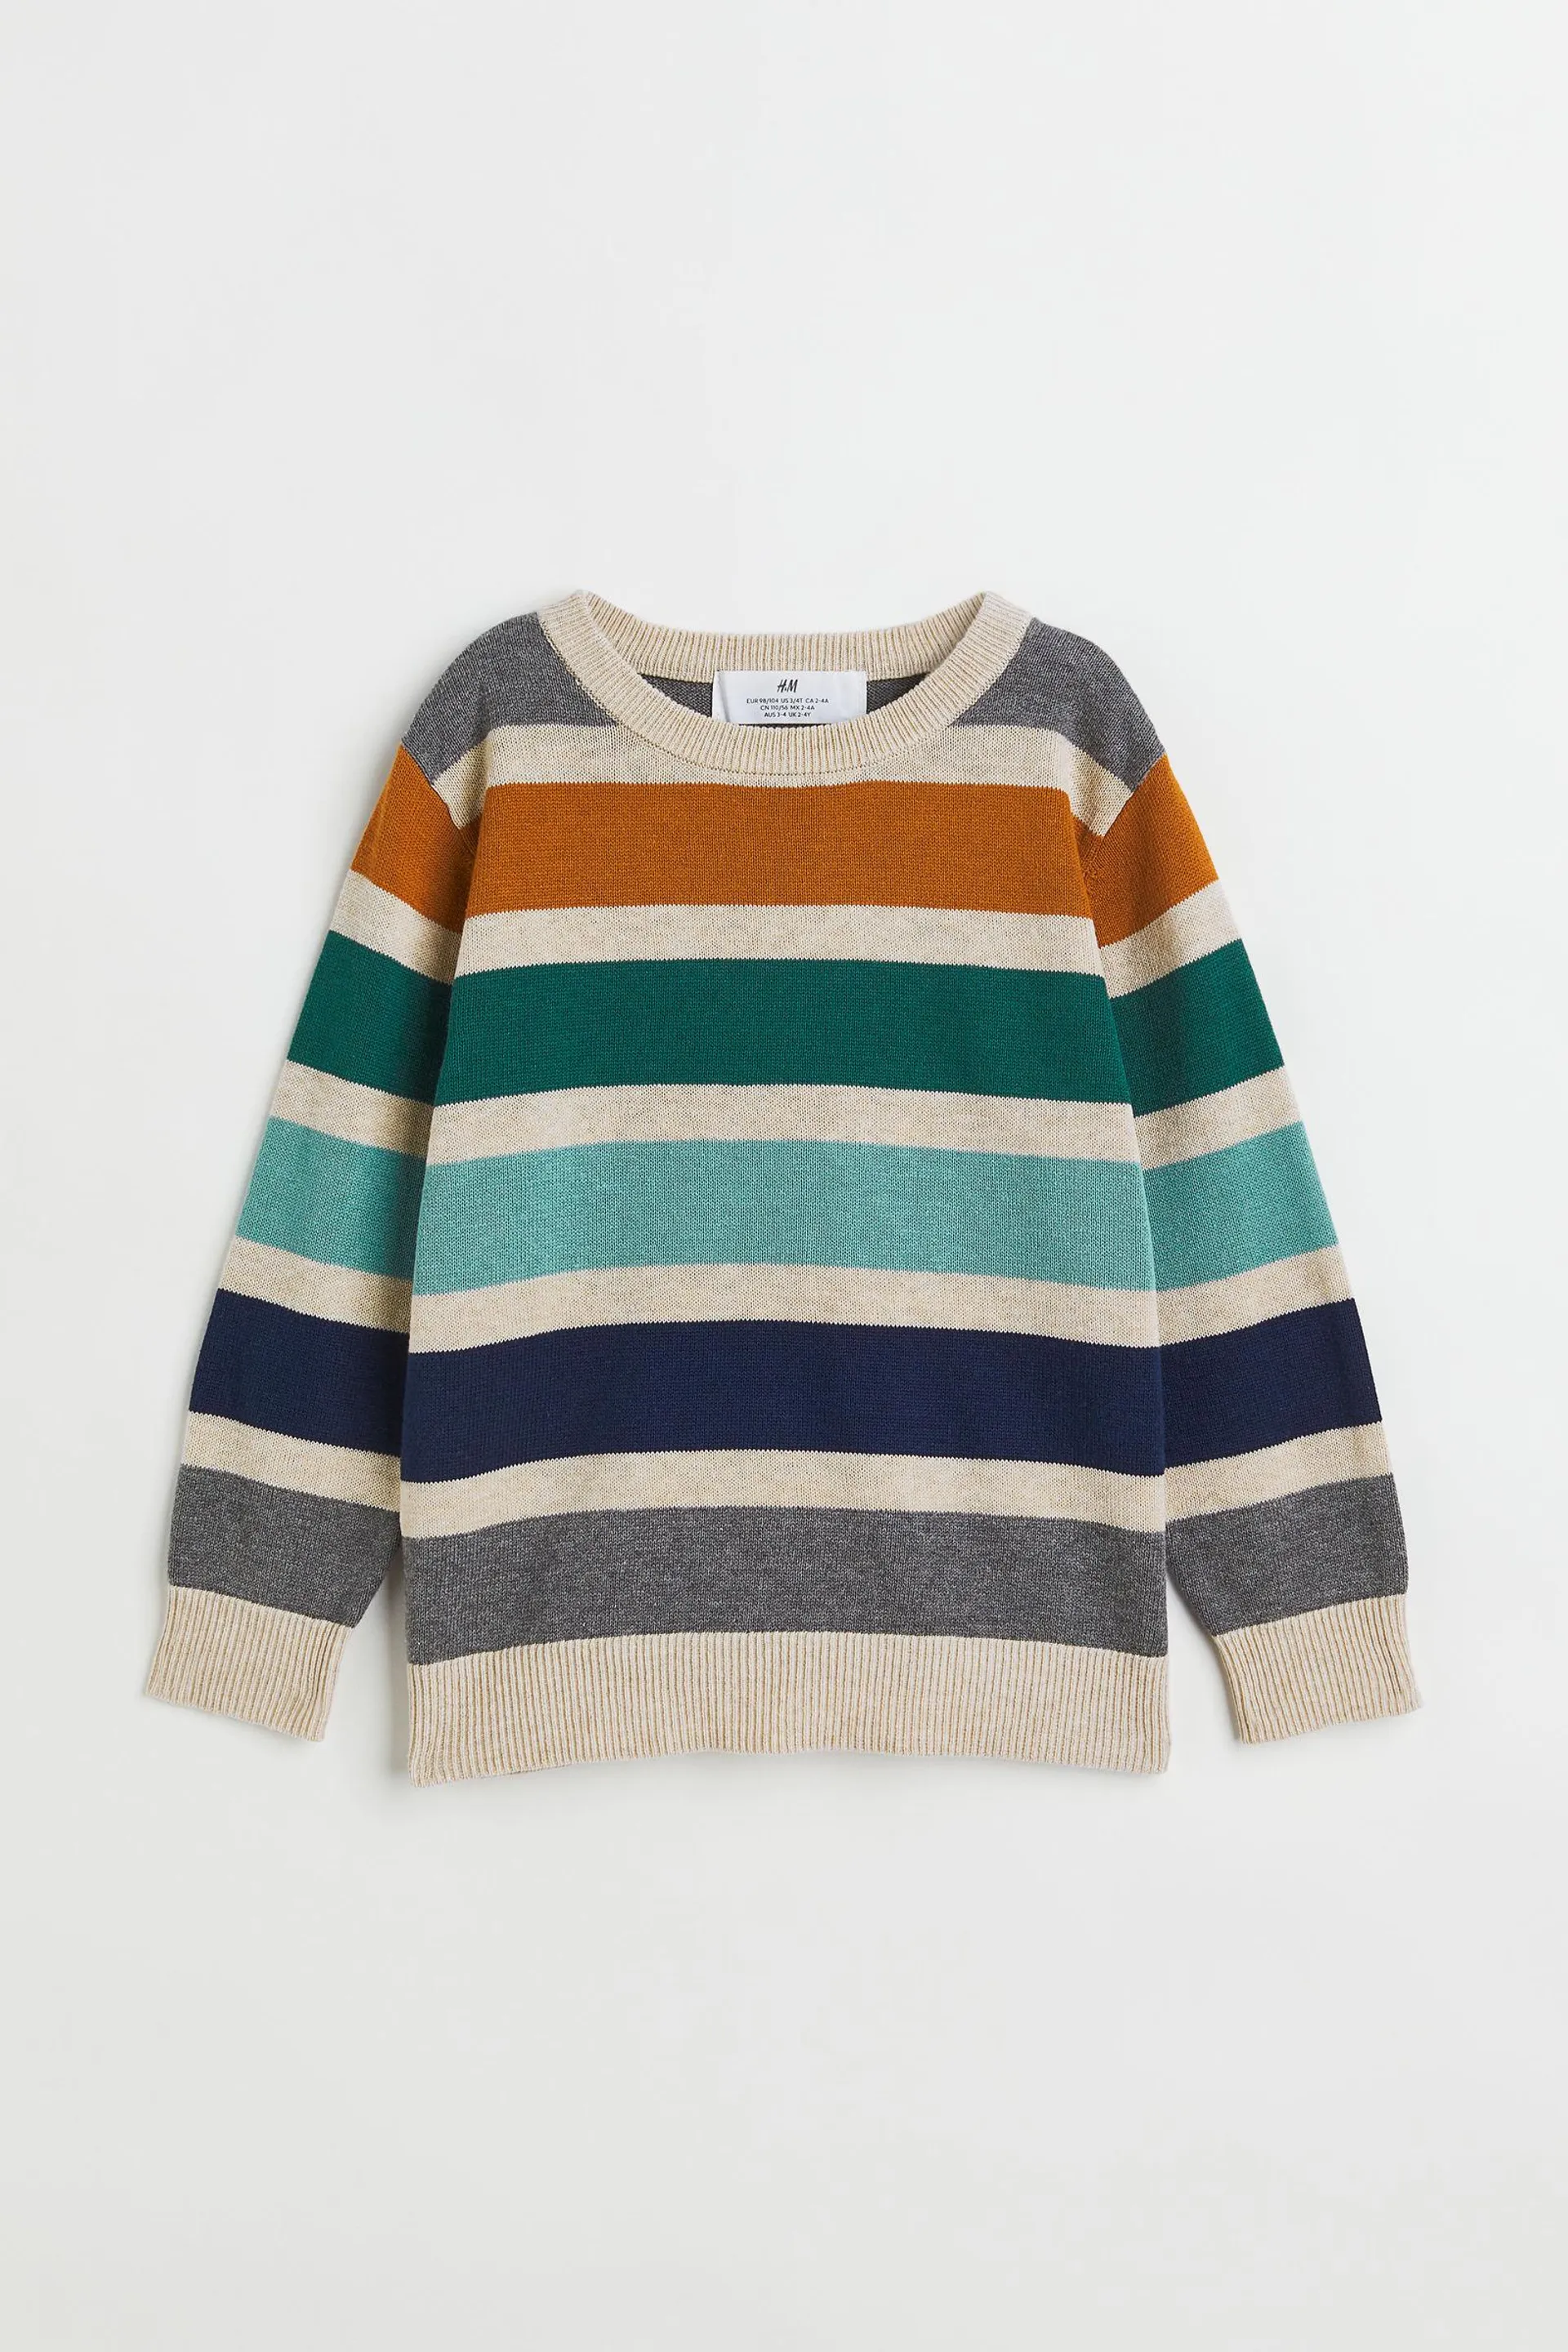 Sweater en punto jacquard de algodón